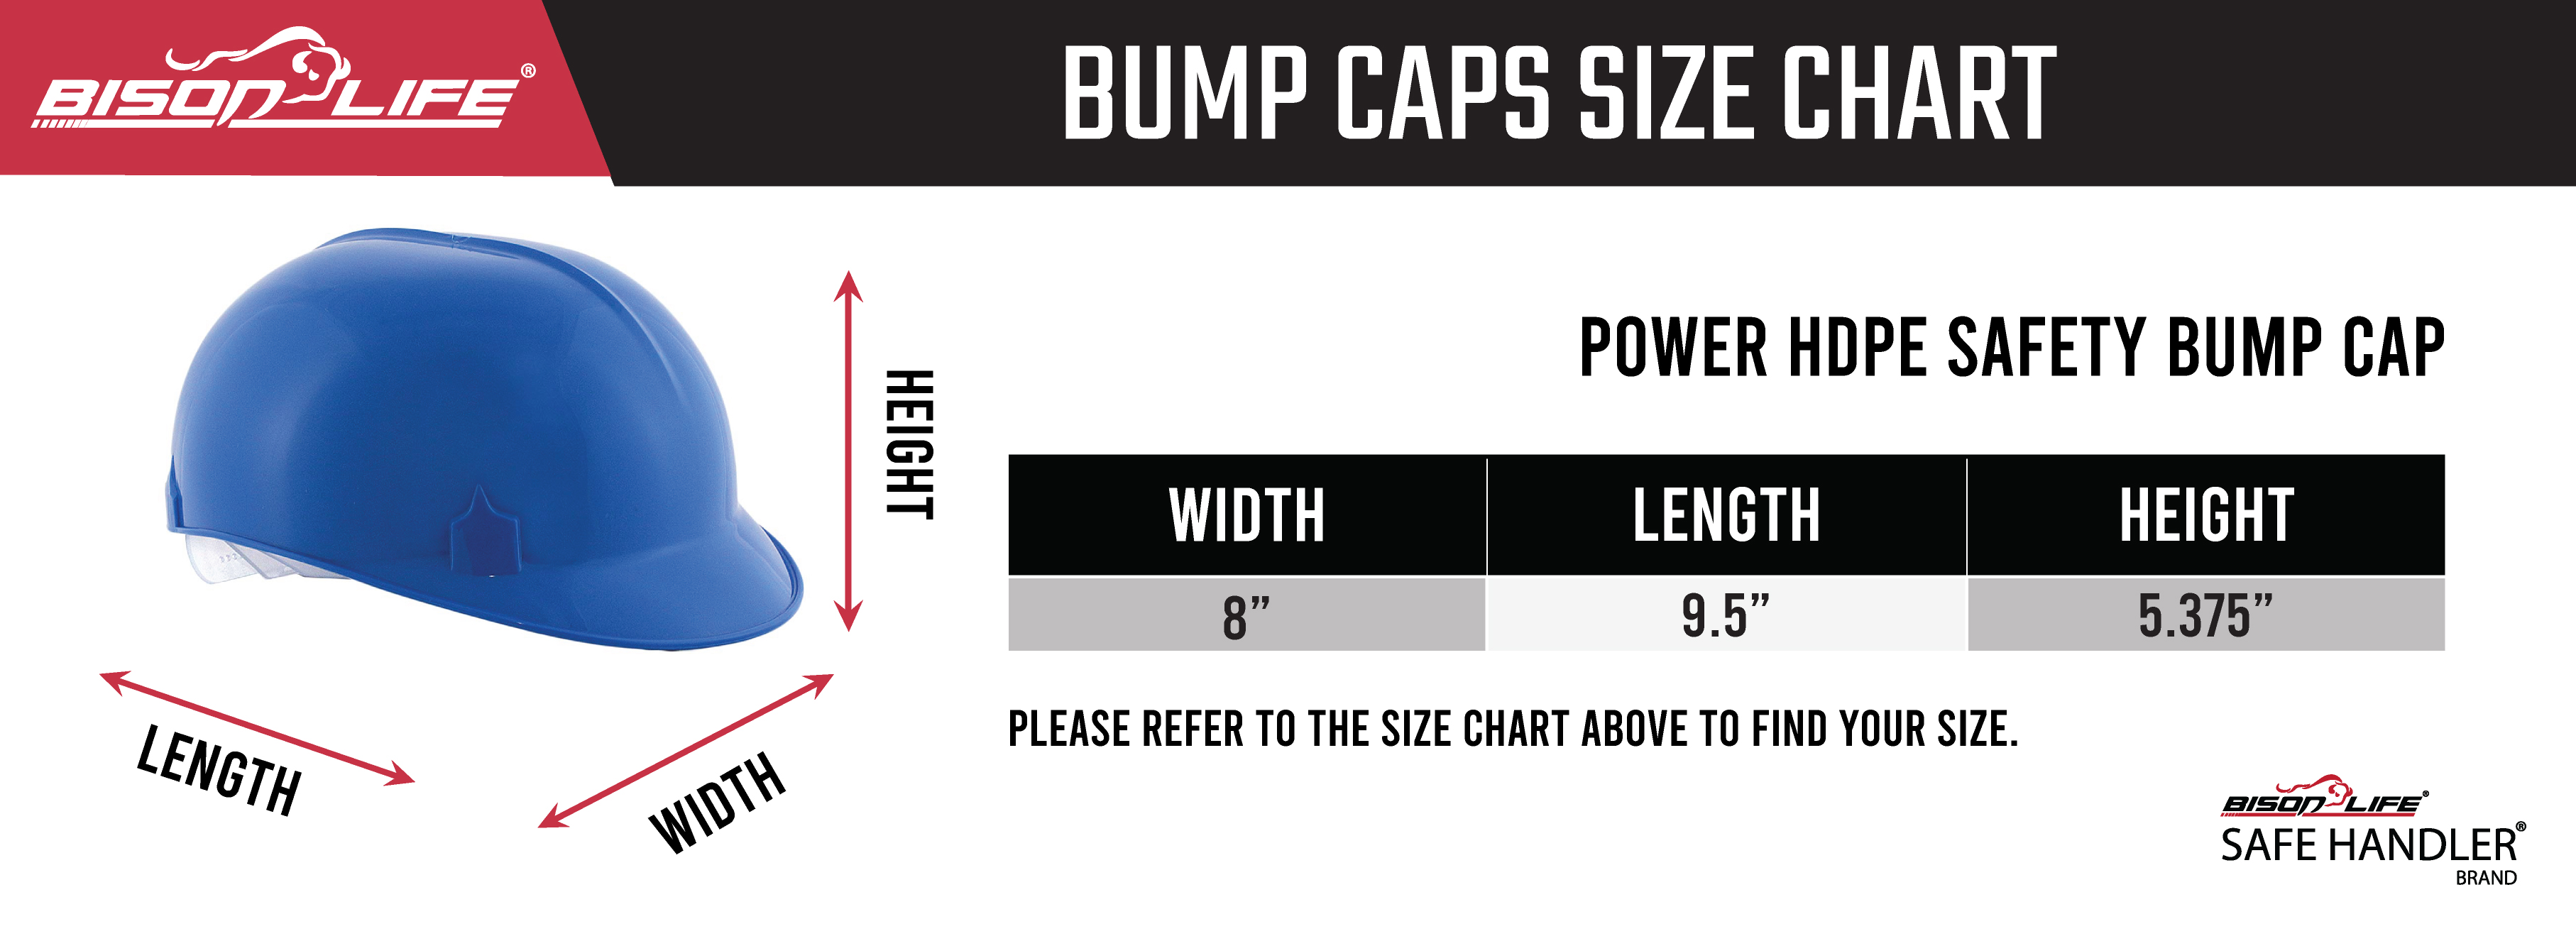 Power HDPE Safety Bump Cap Size Chart